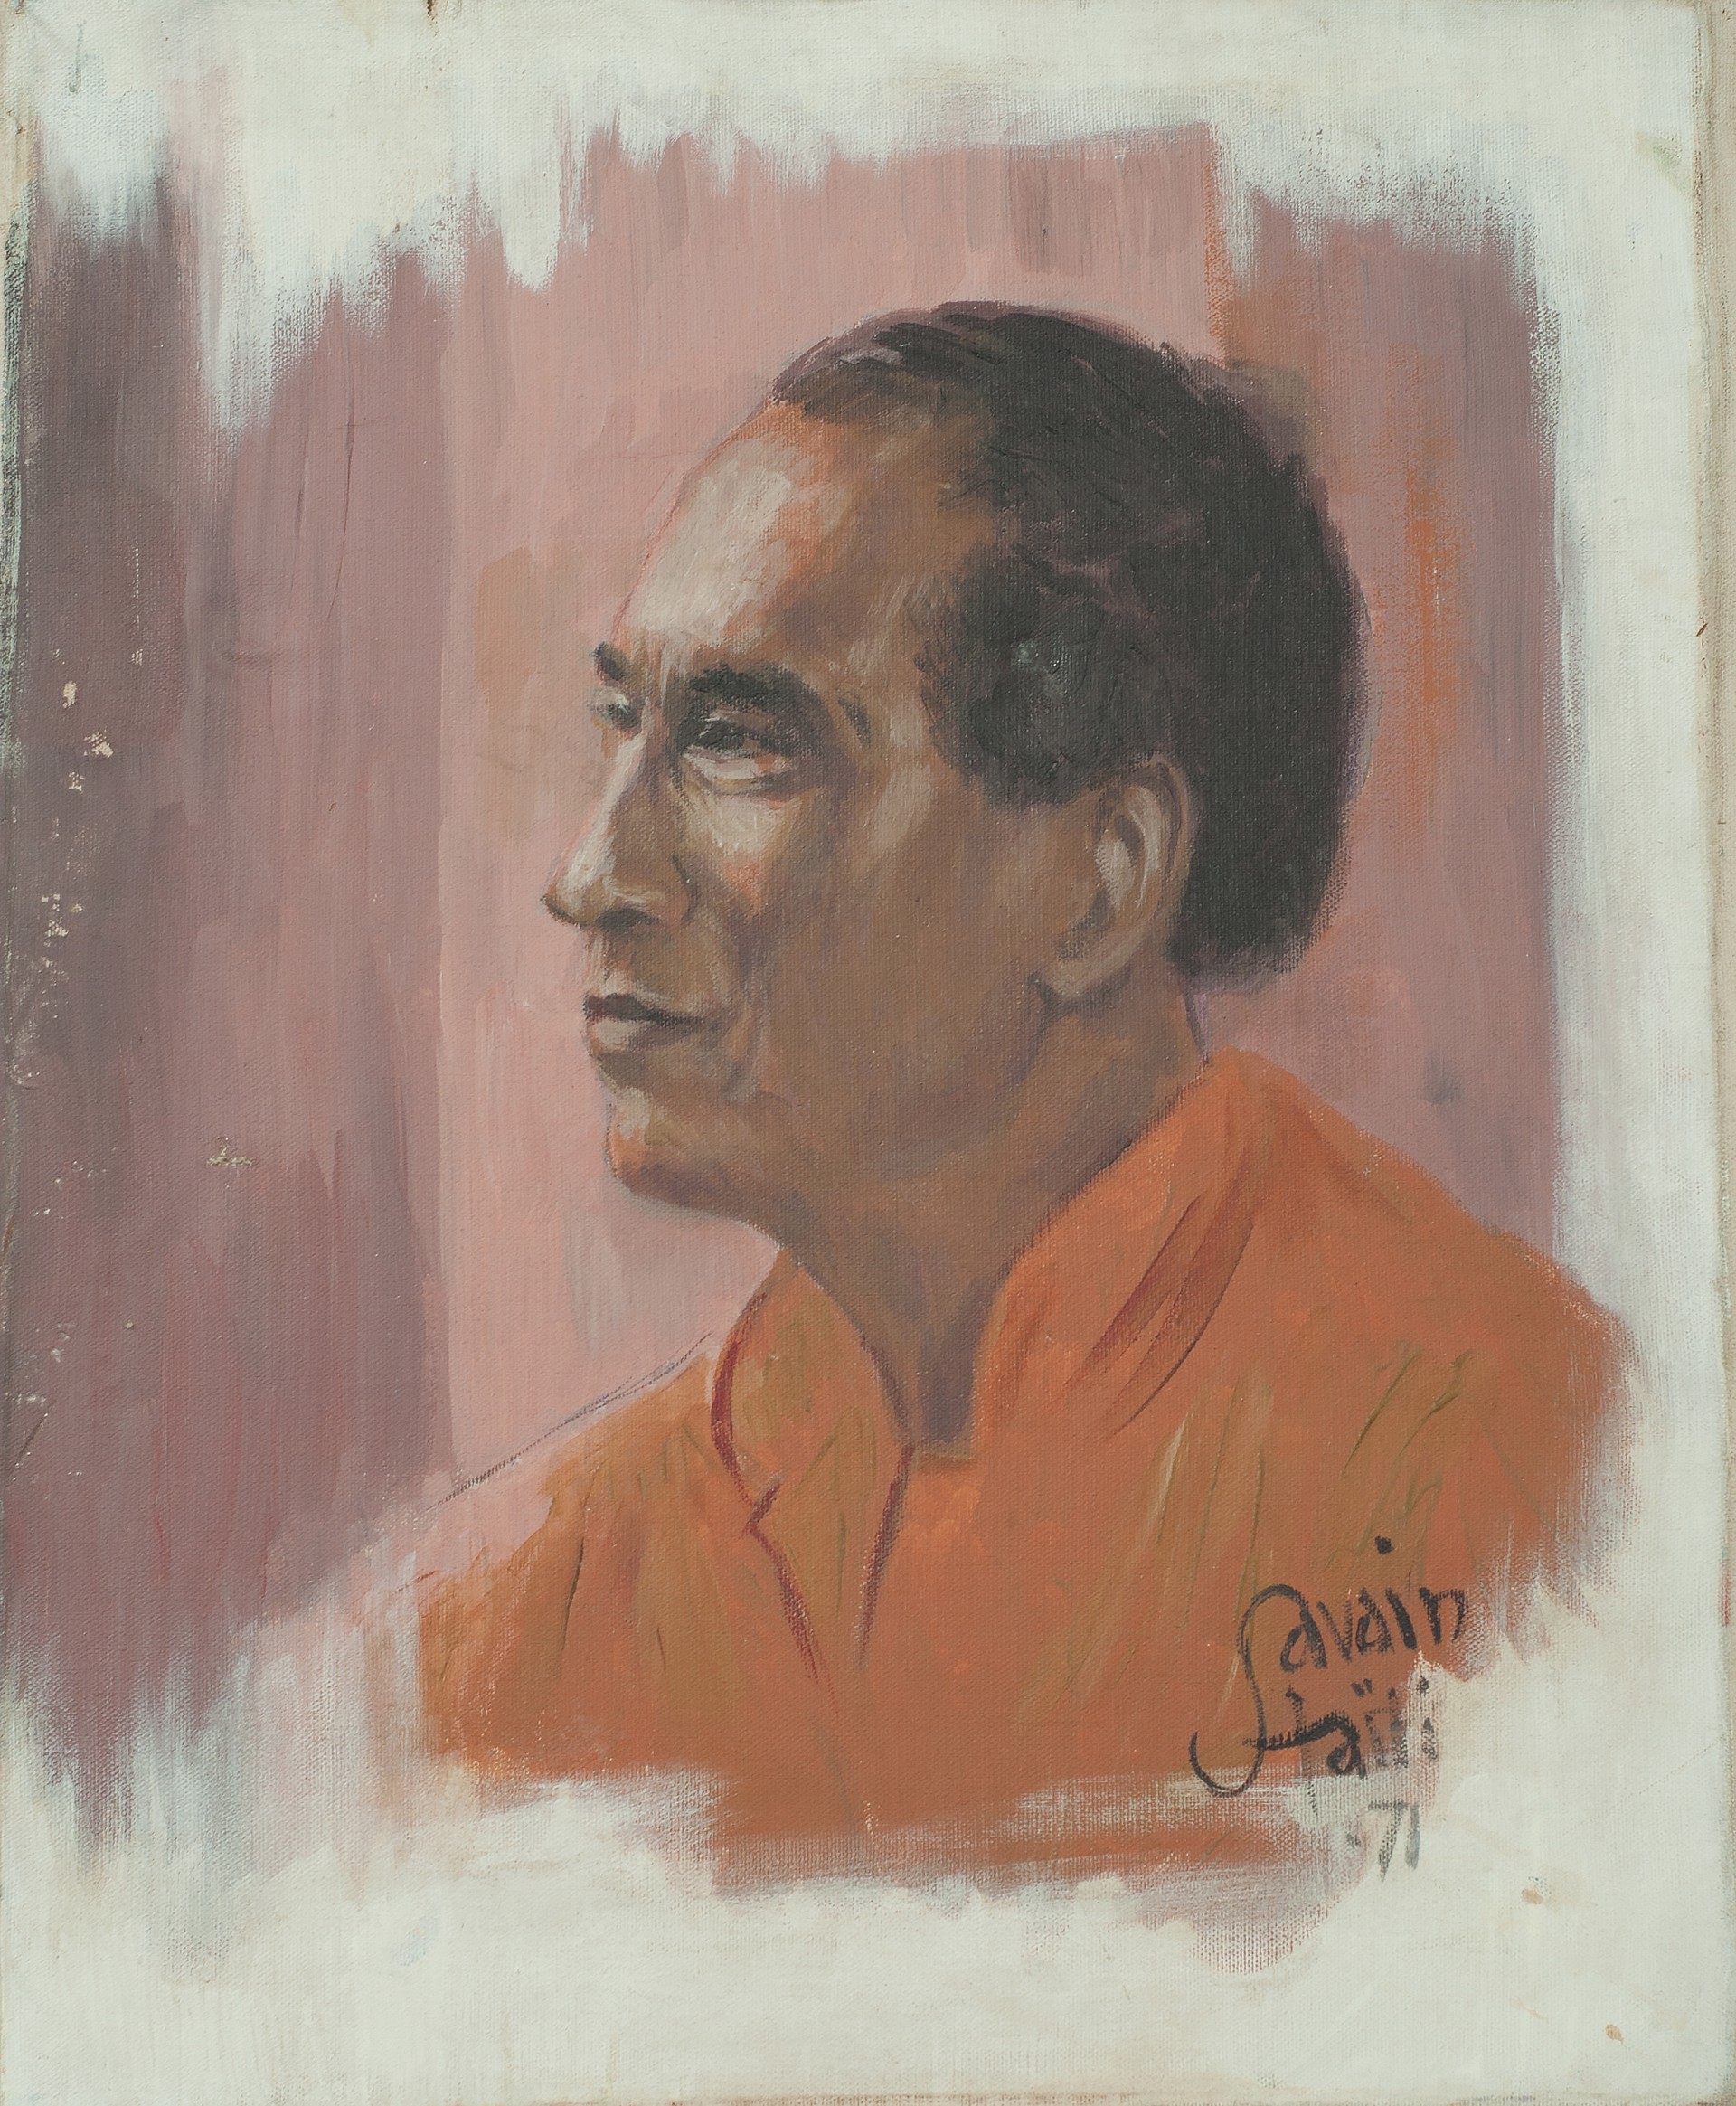 Artist's Self-Portrait #11-3-96 by Petion Savain (Haitian, 1906-1975)